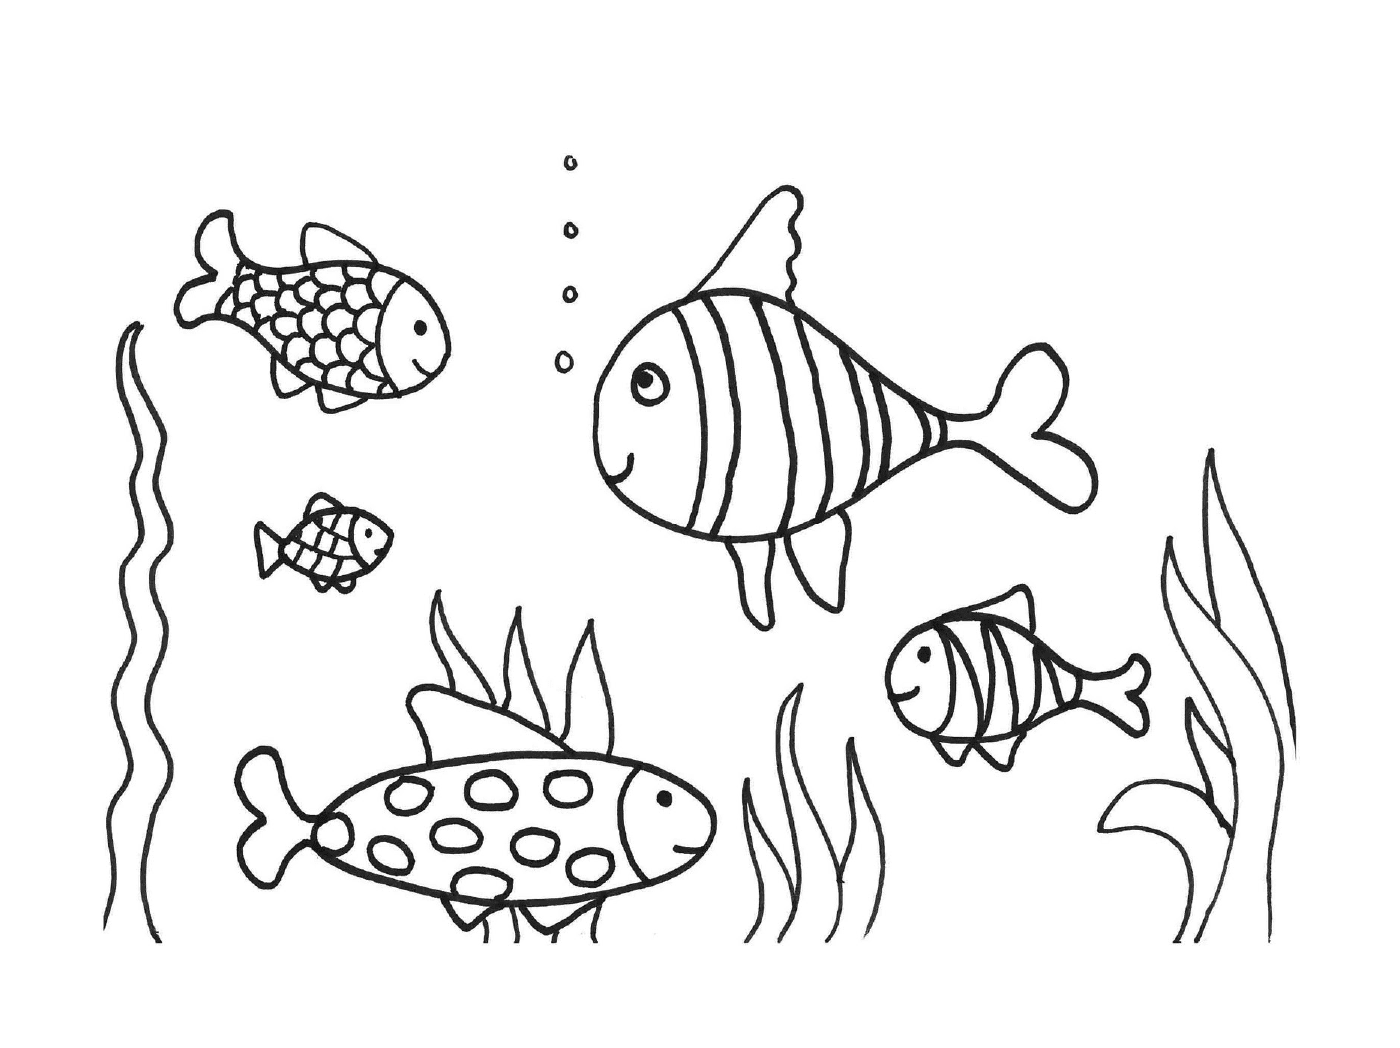  Un sacco di pesci in acqua 